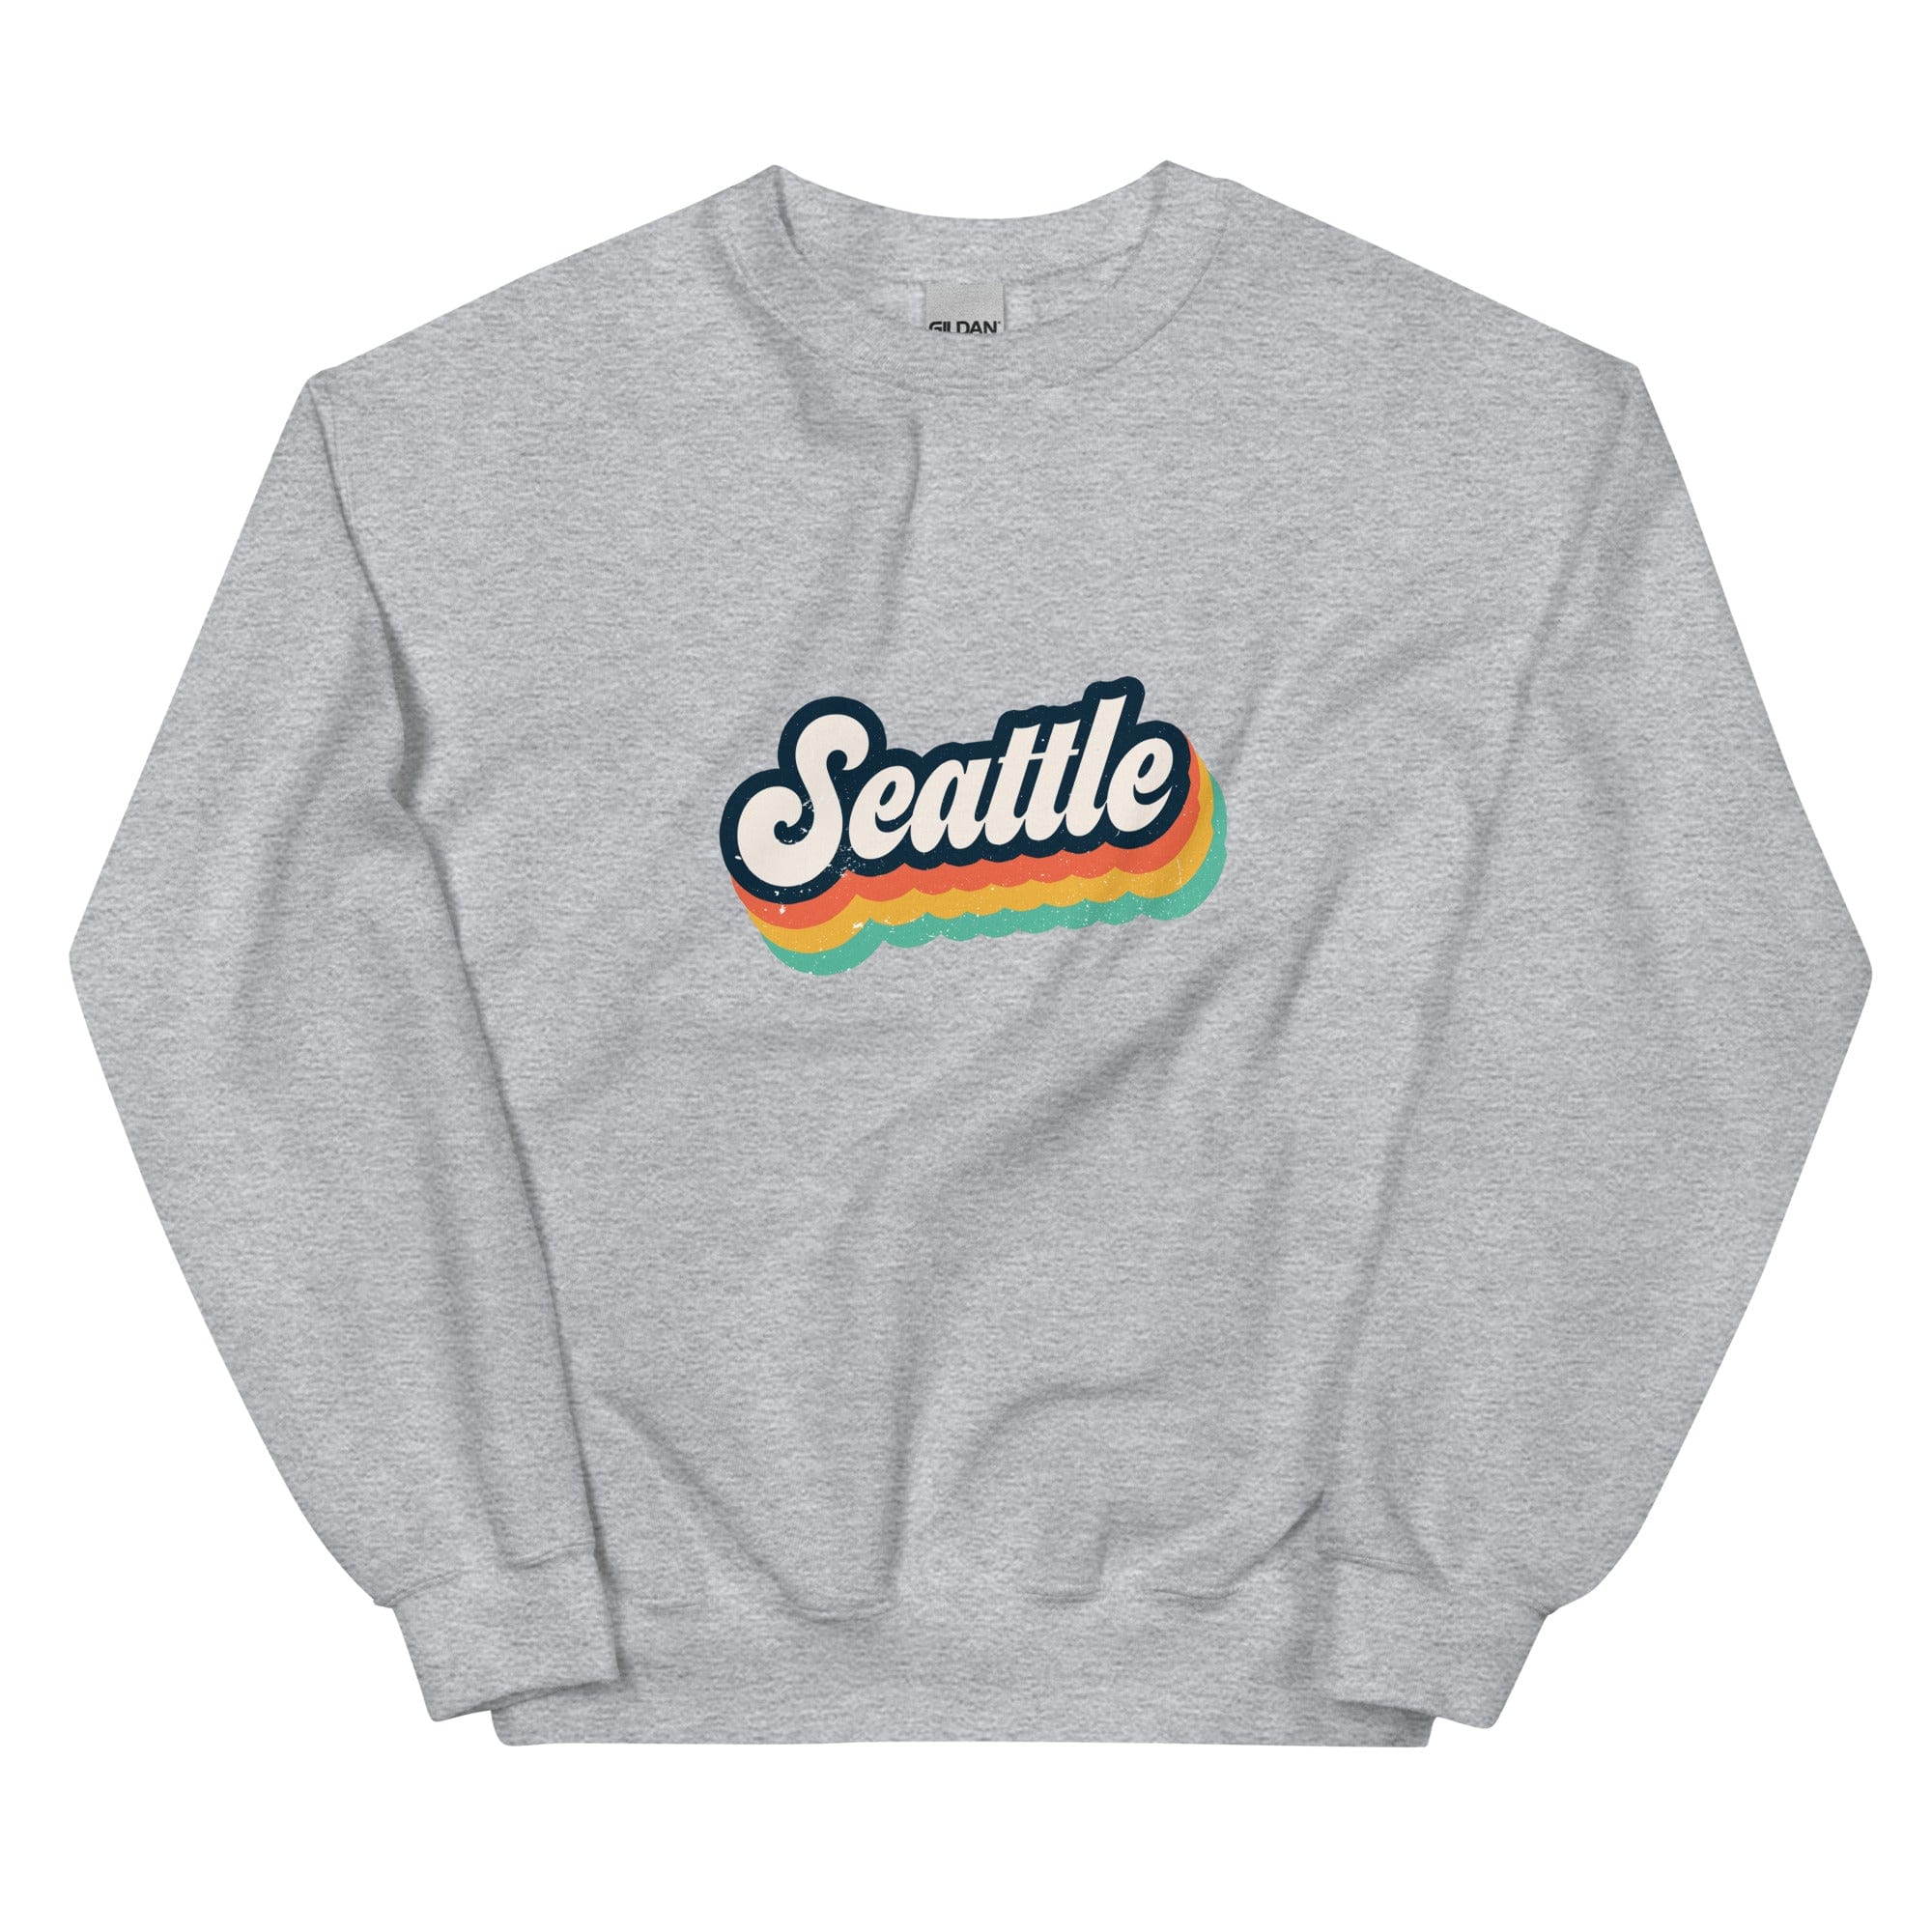 Retro Seattle Crewneck Sweatshirt - City Shirt Co